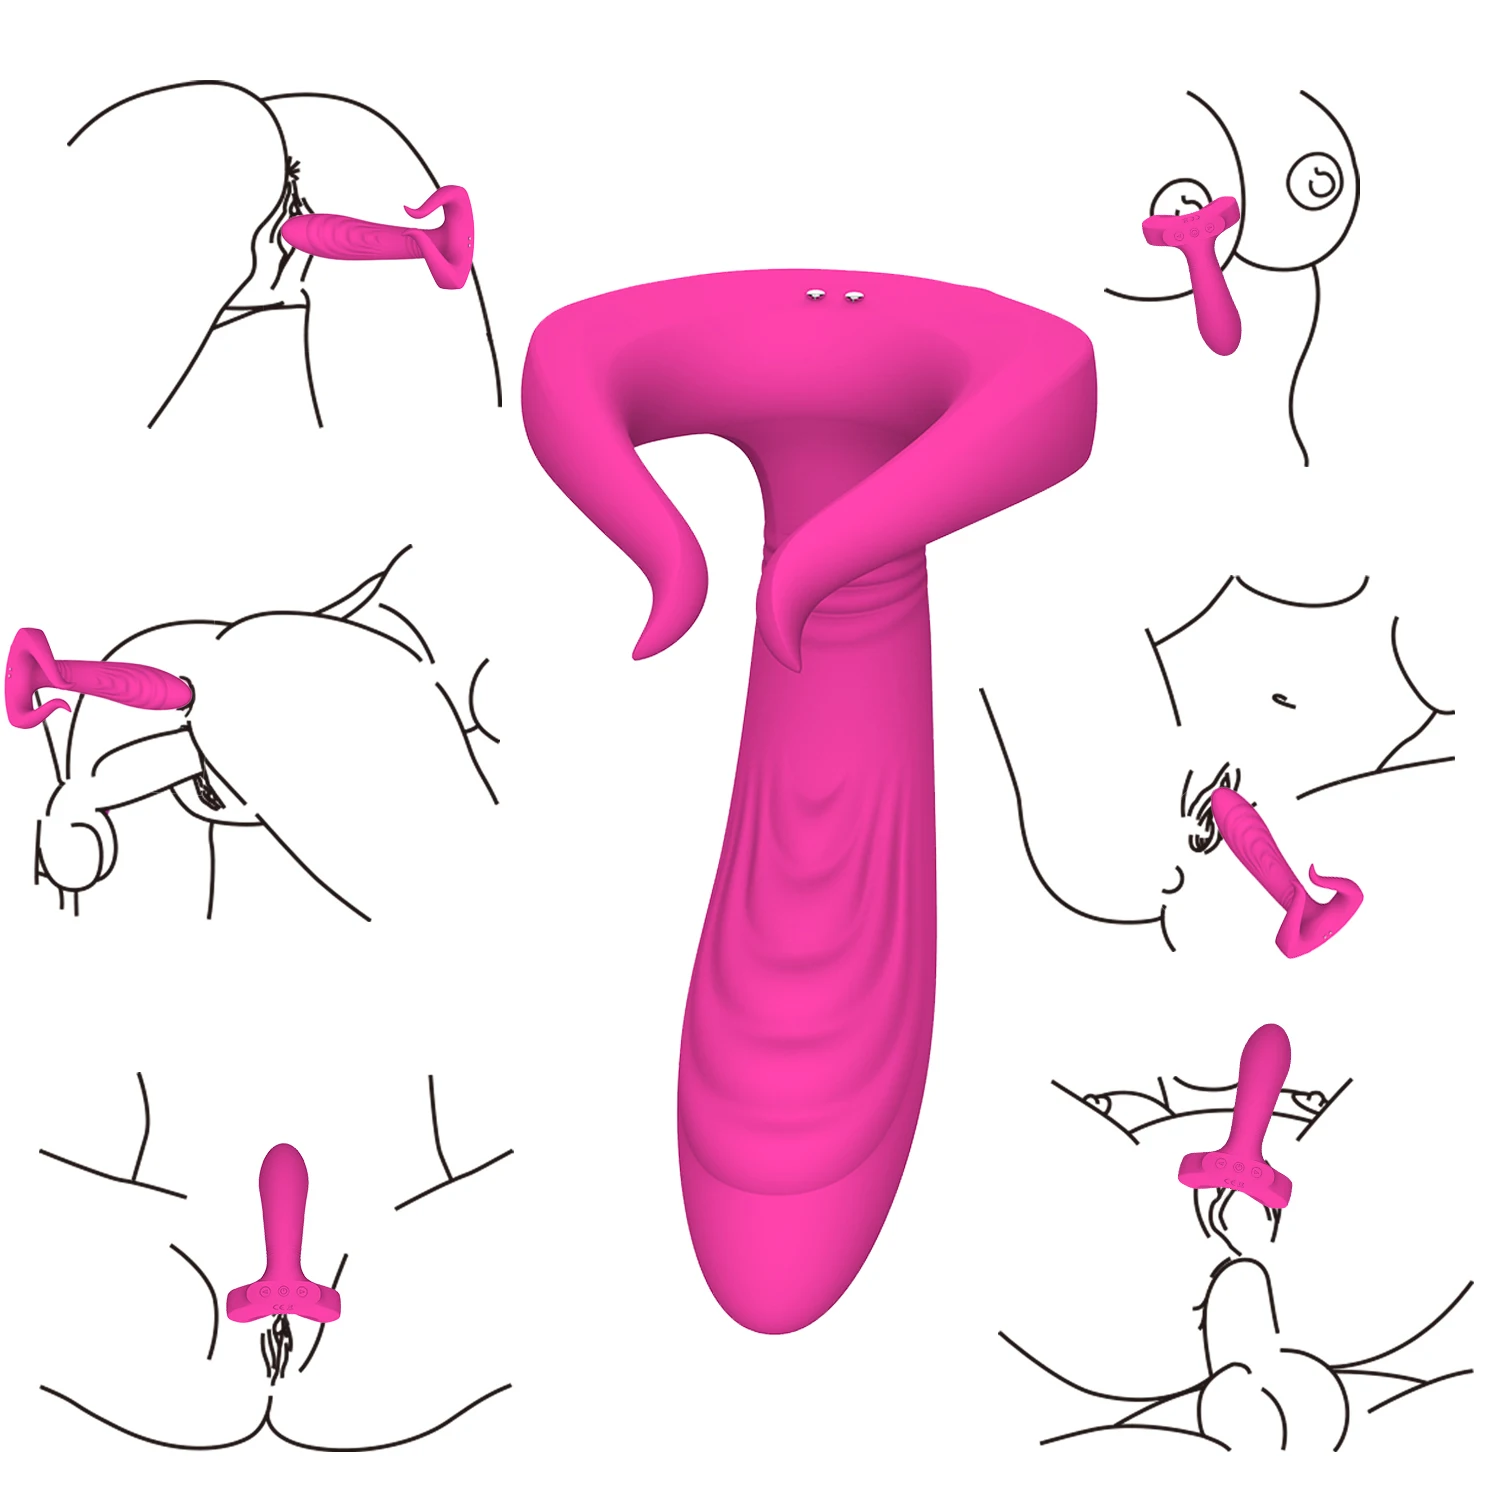 Clitoris Vibrator